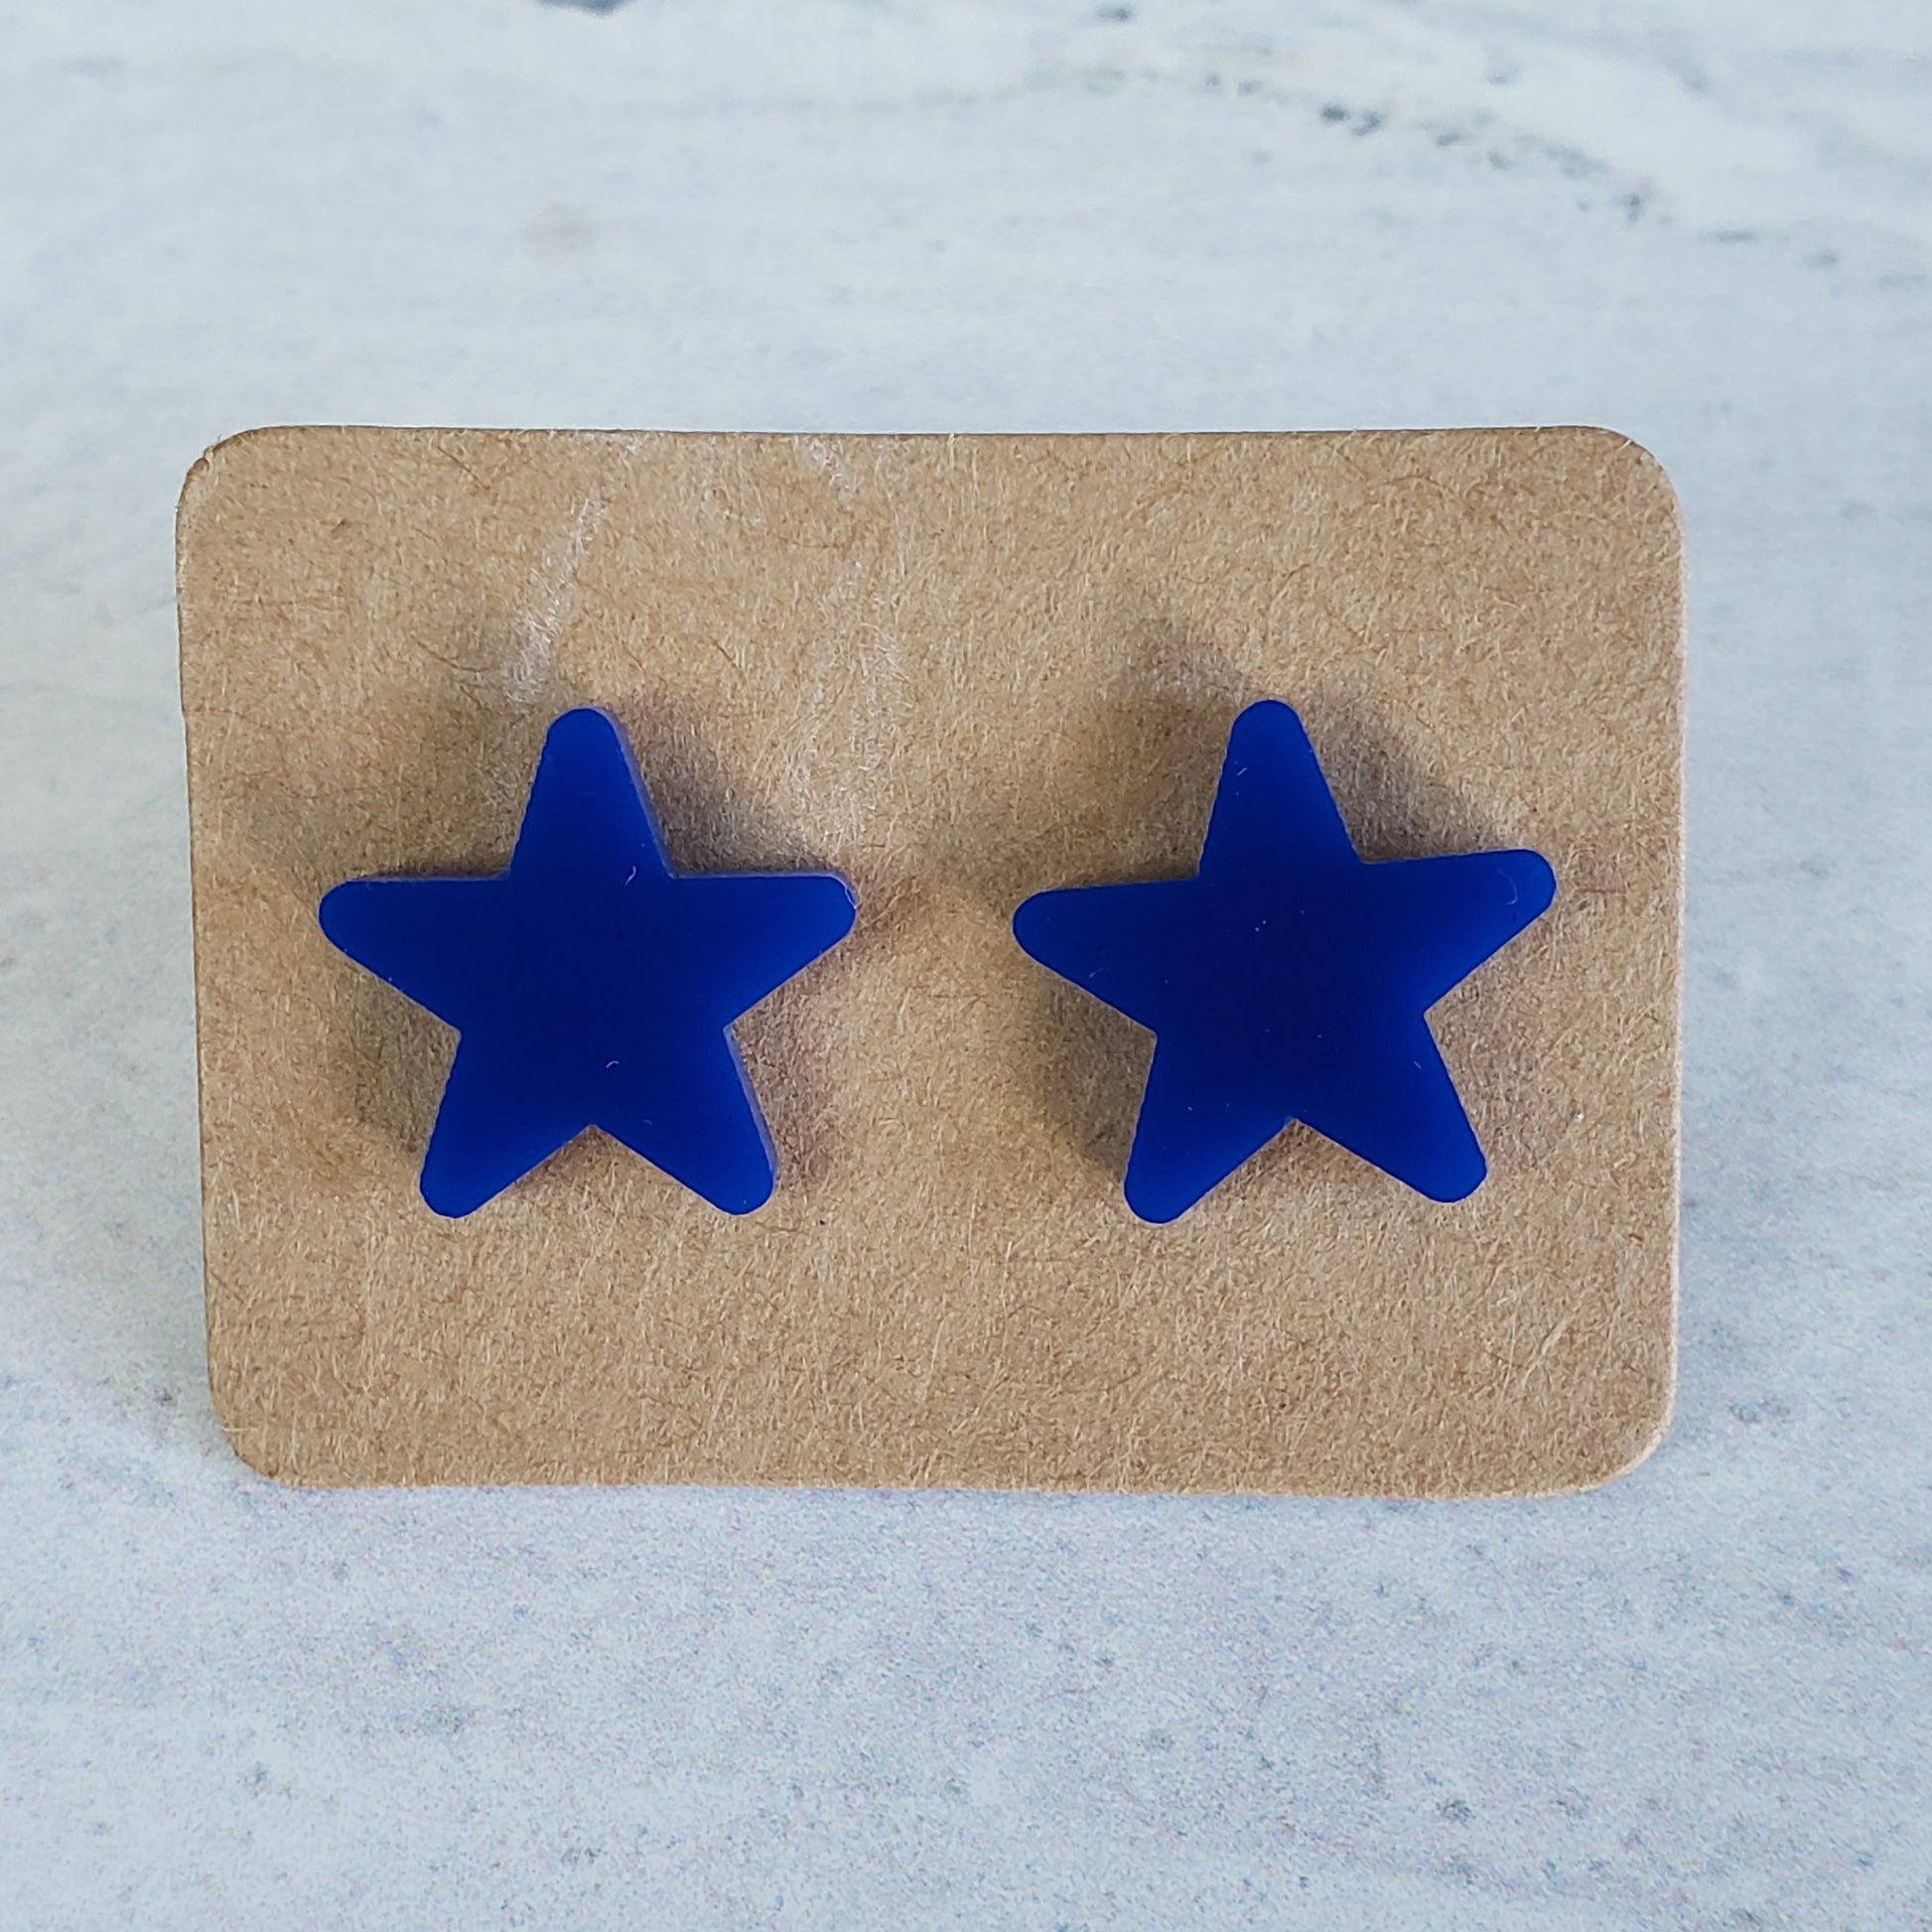 Navy blue star stud earrings on earring cards